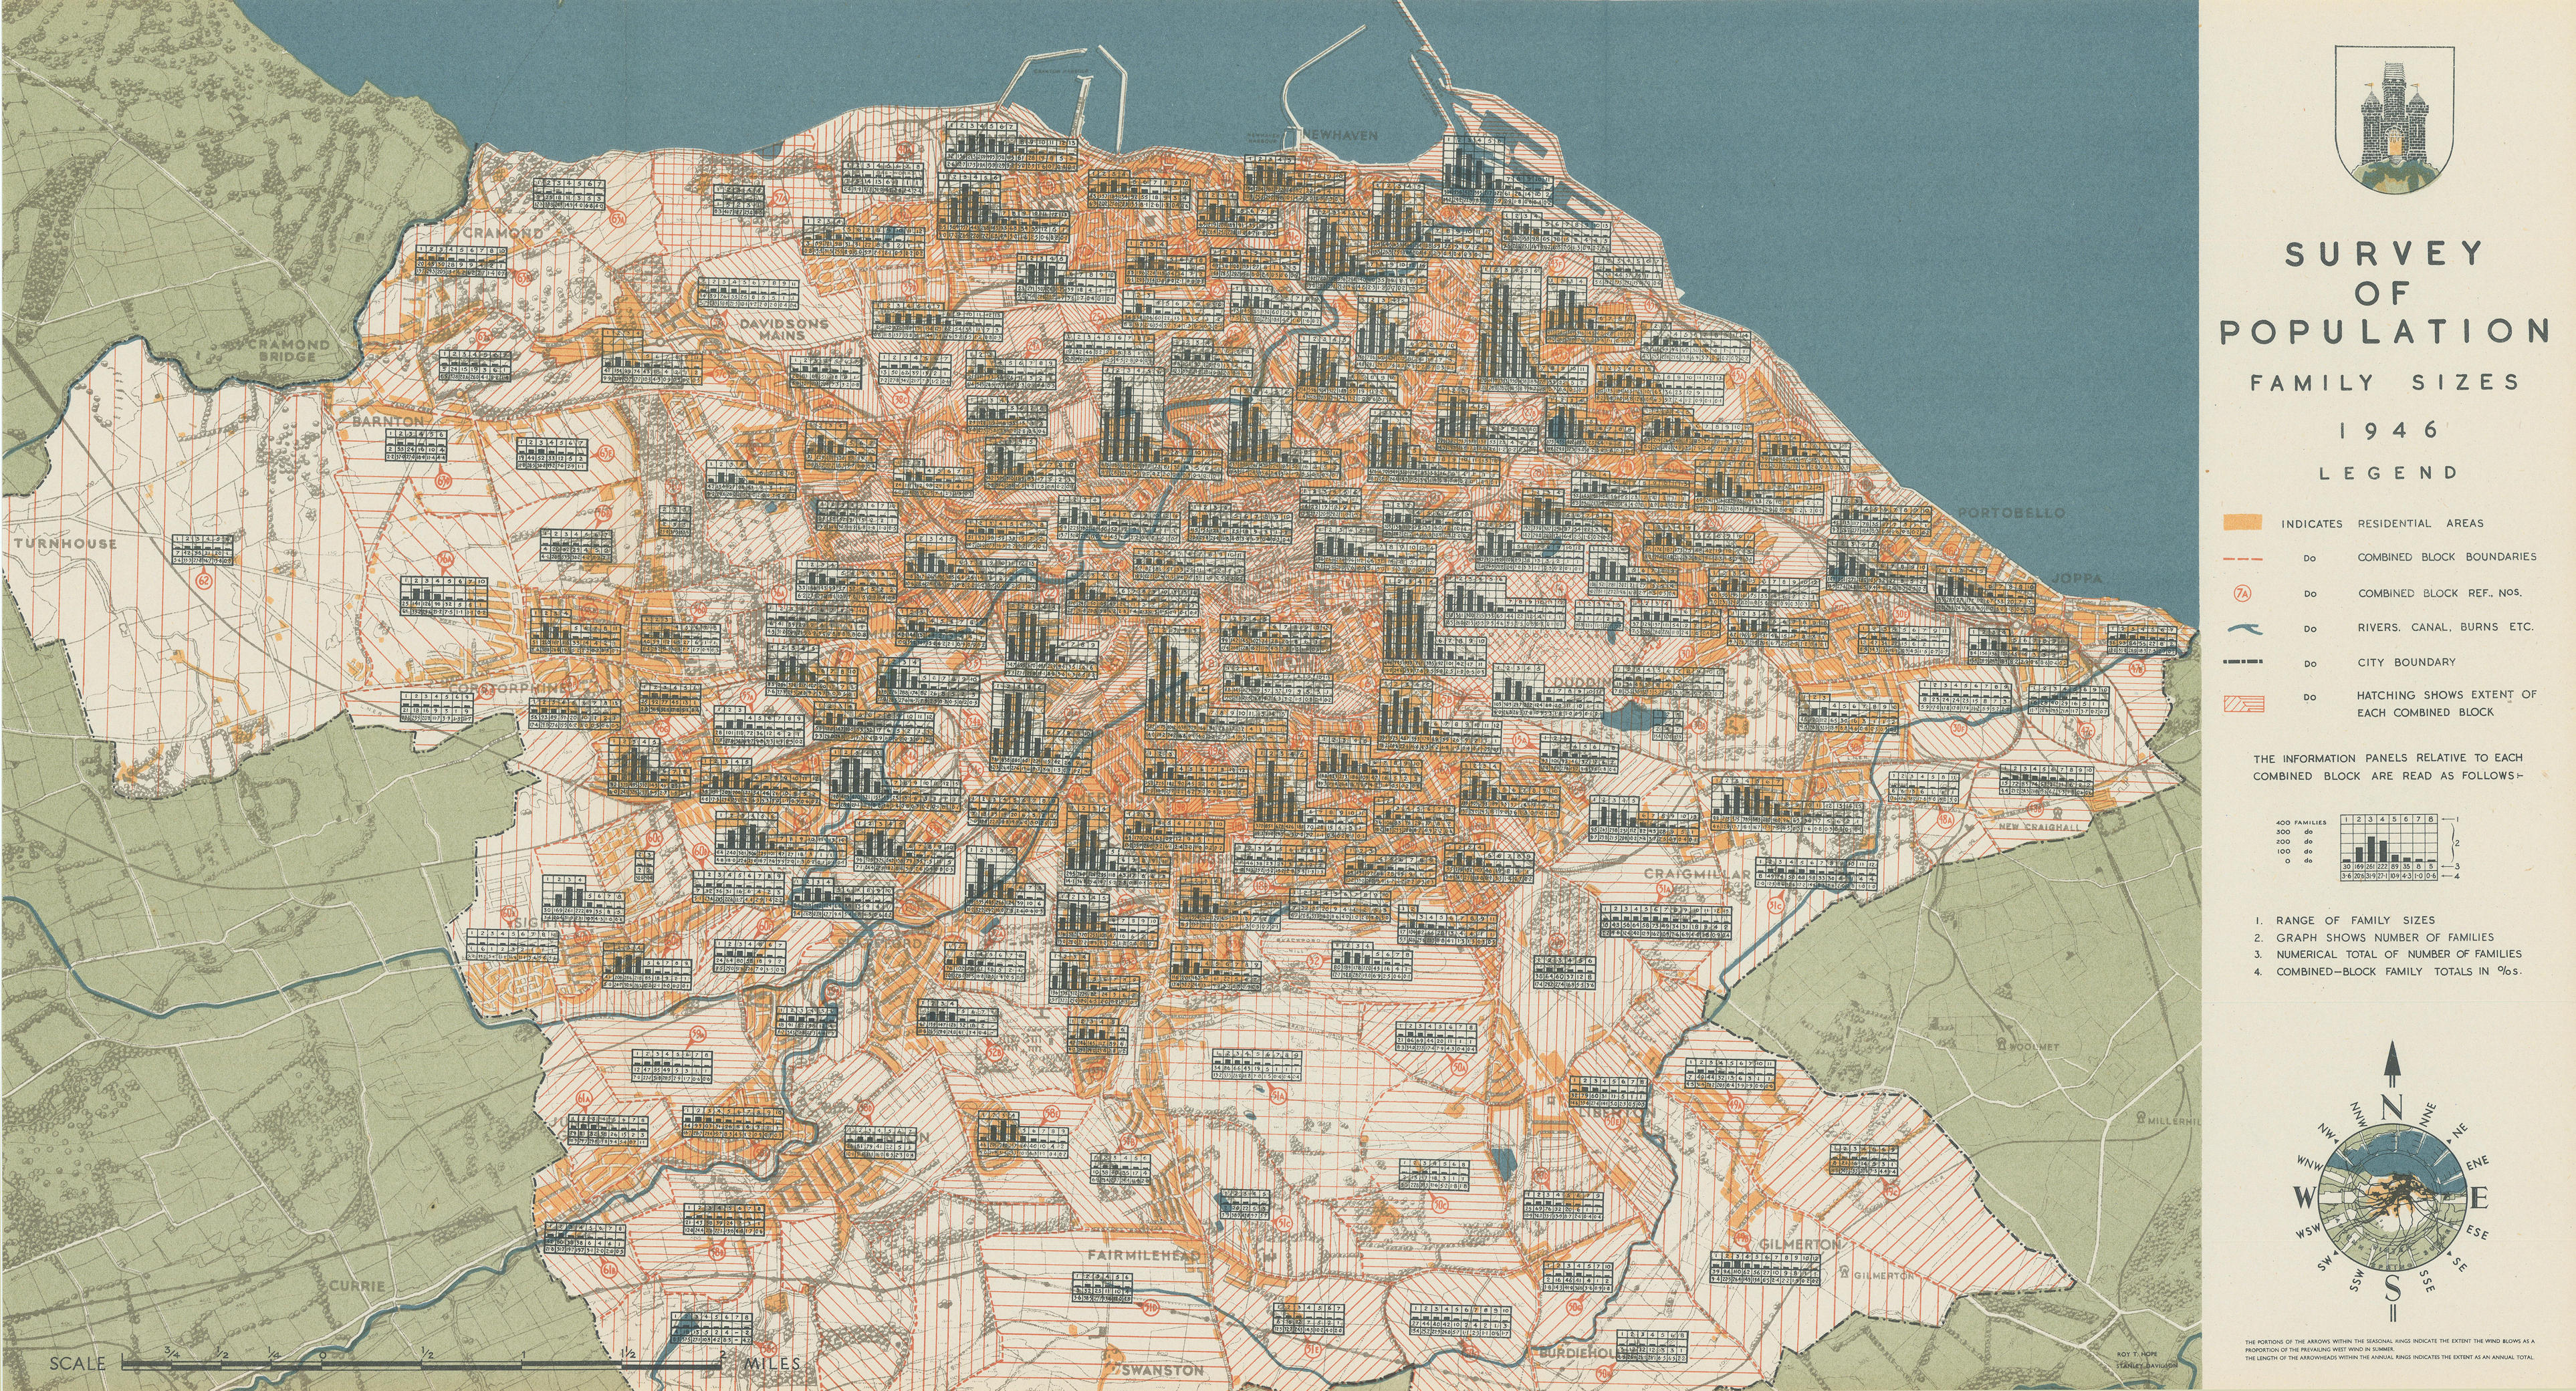 EDINBURGH. Survey of Population - Family Sizes 1946. ABERCROMBIE 1949 old map